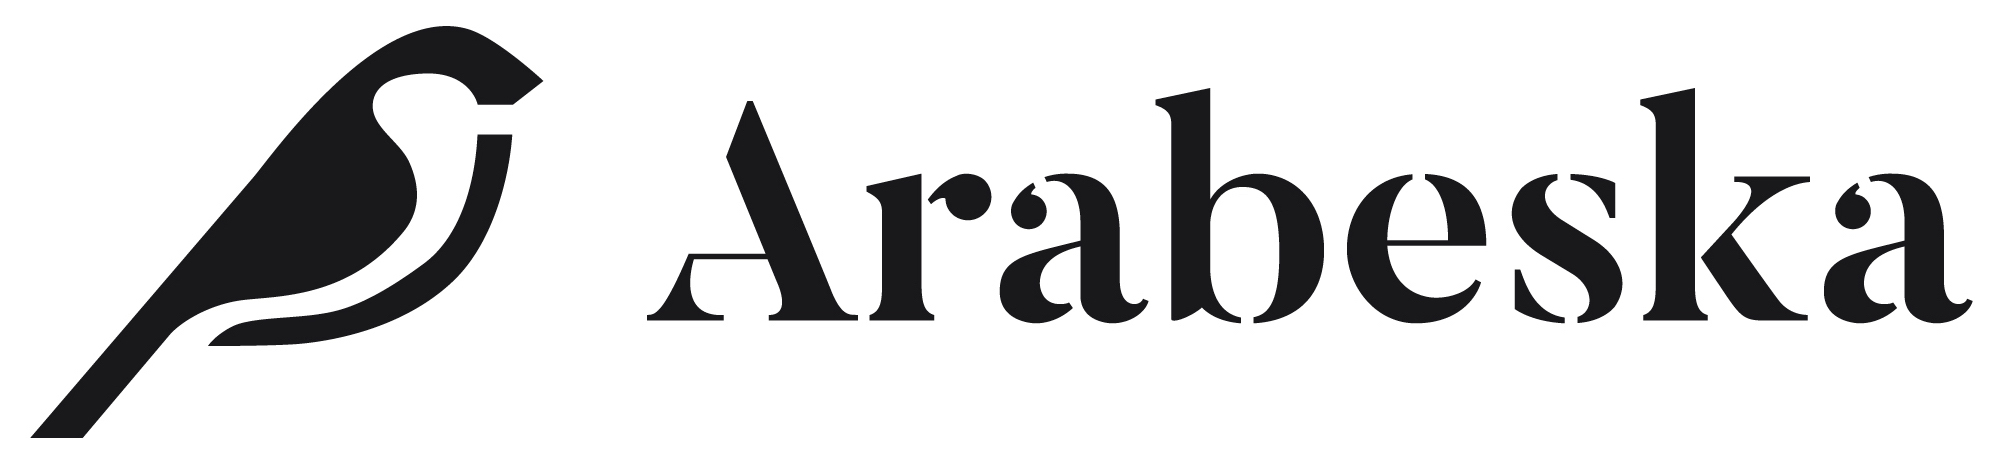 Arabeska